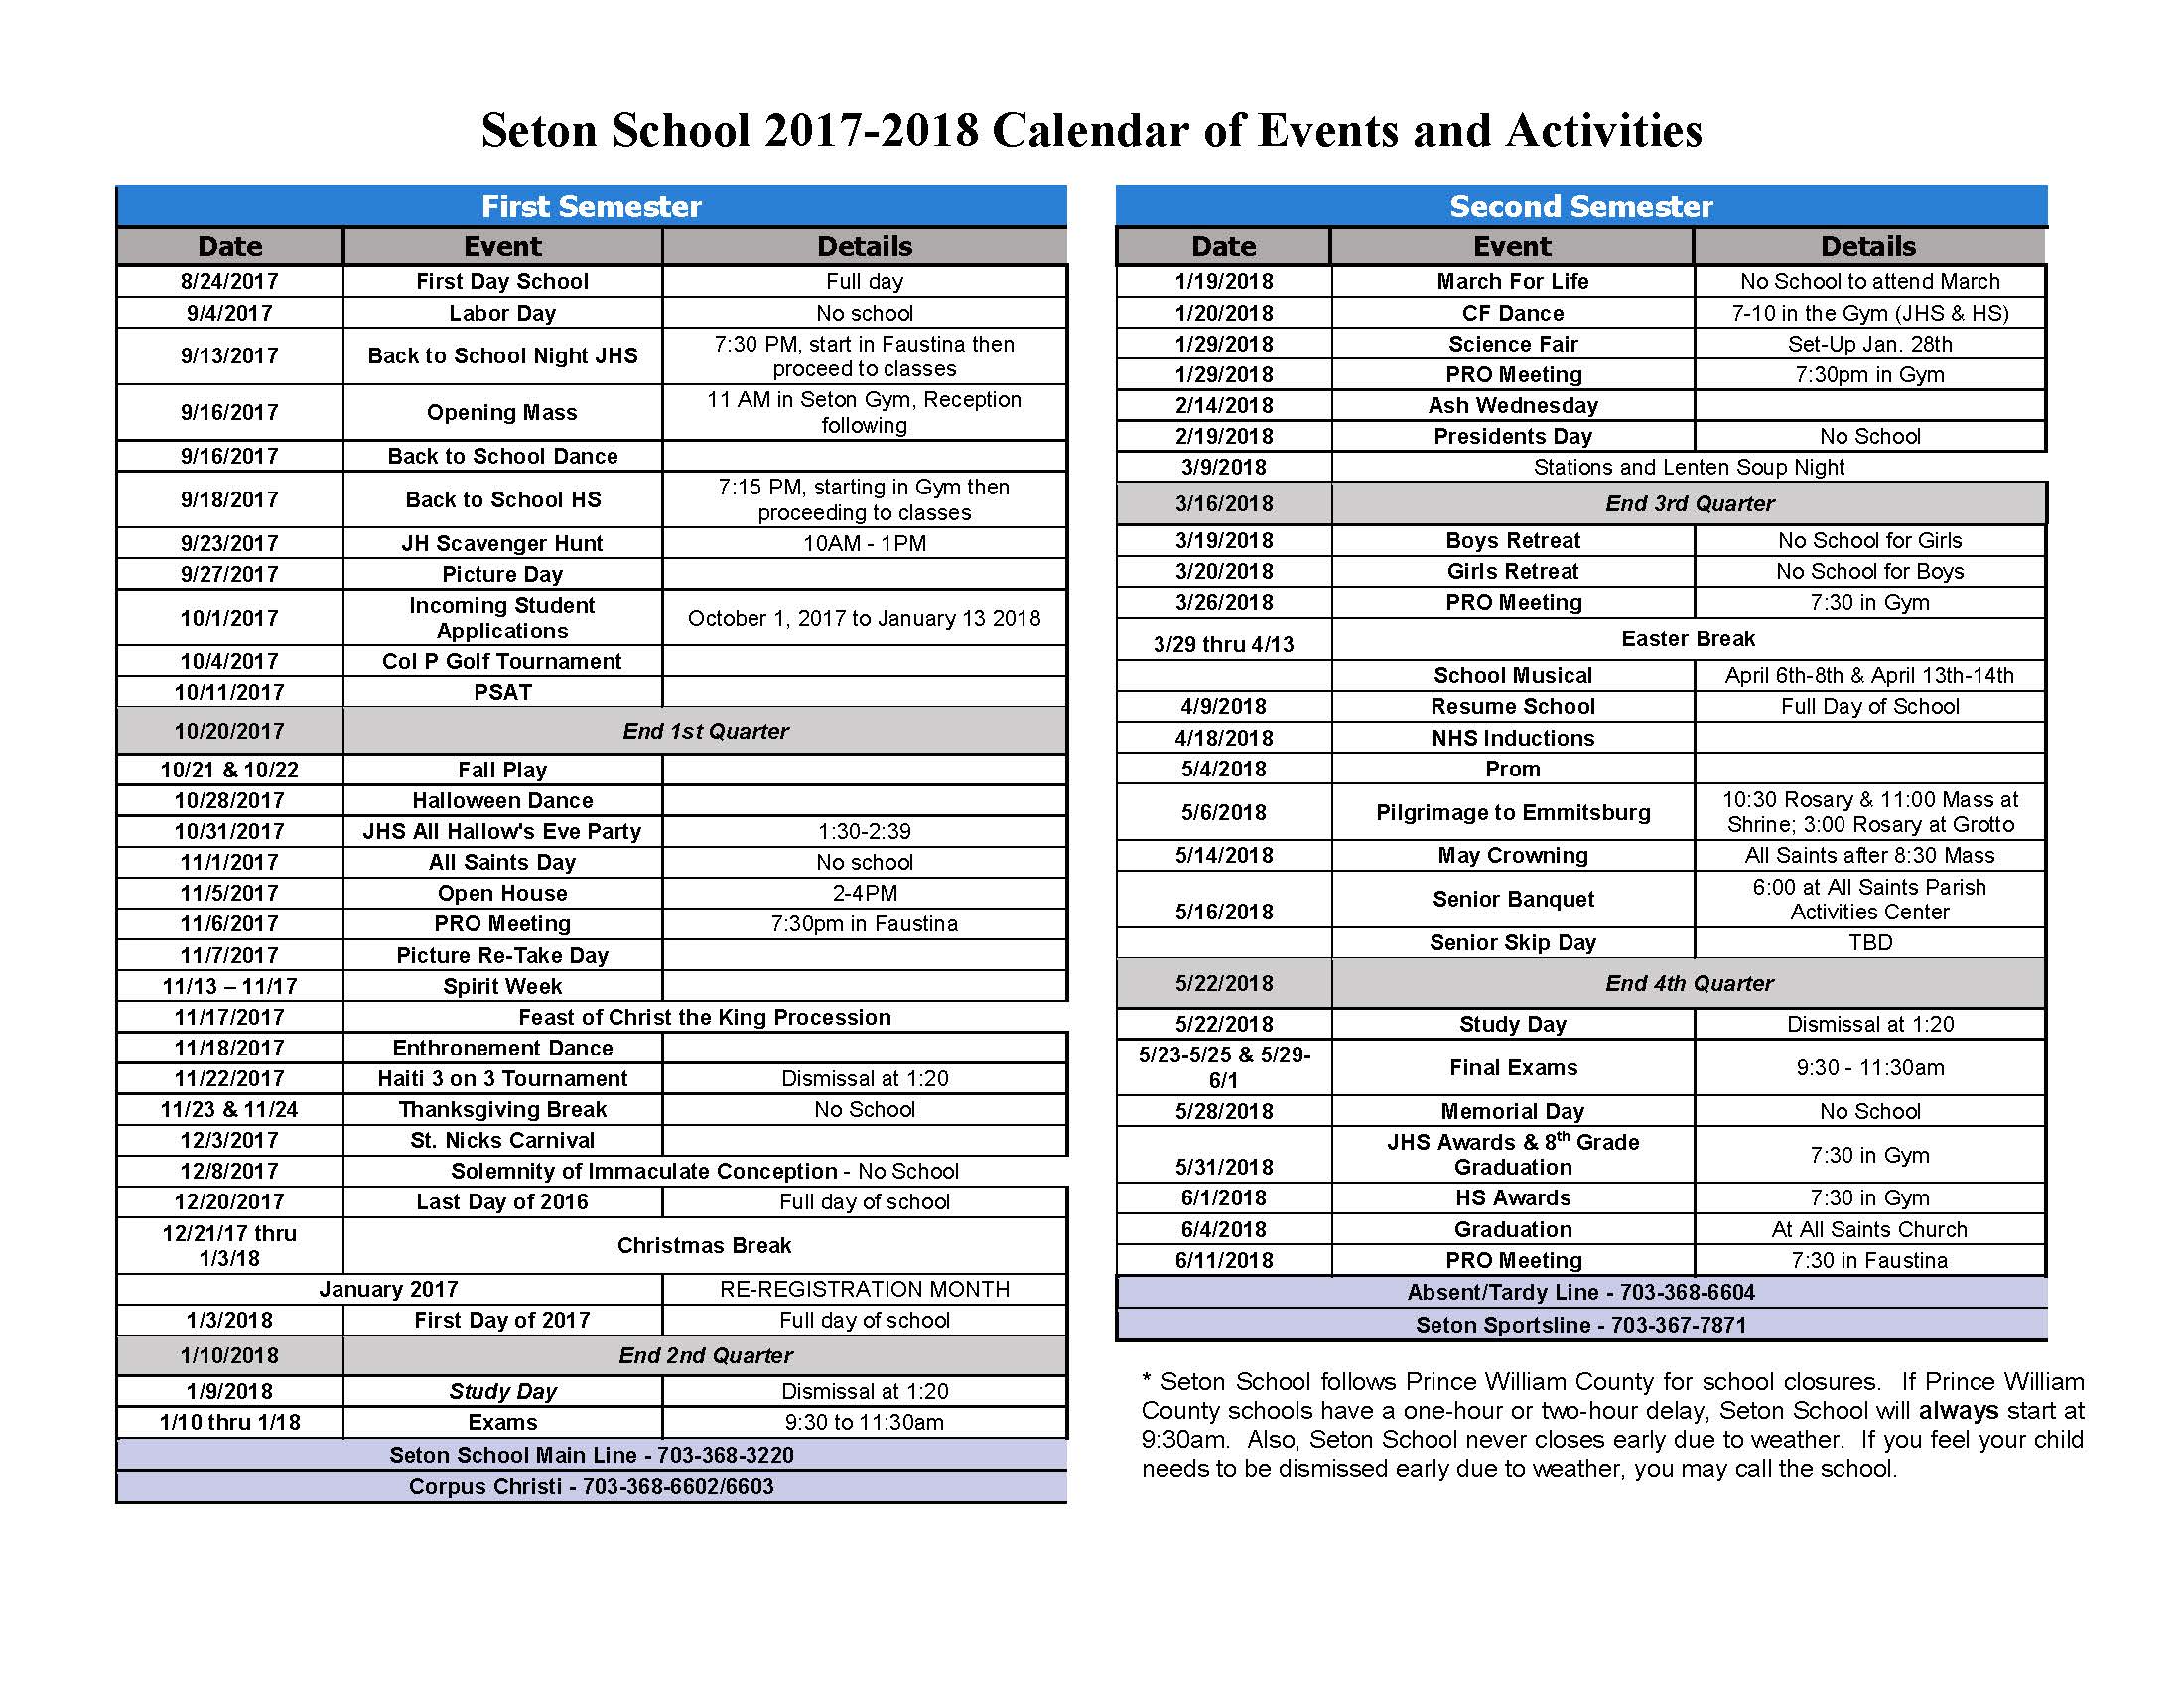 Seton School Calendar of Events and Activities | Seton School Manassas